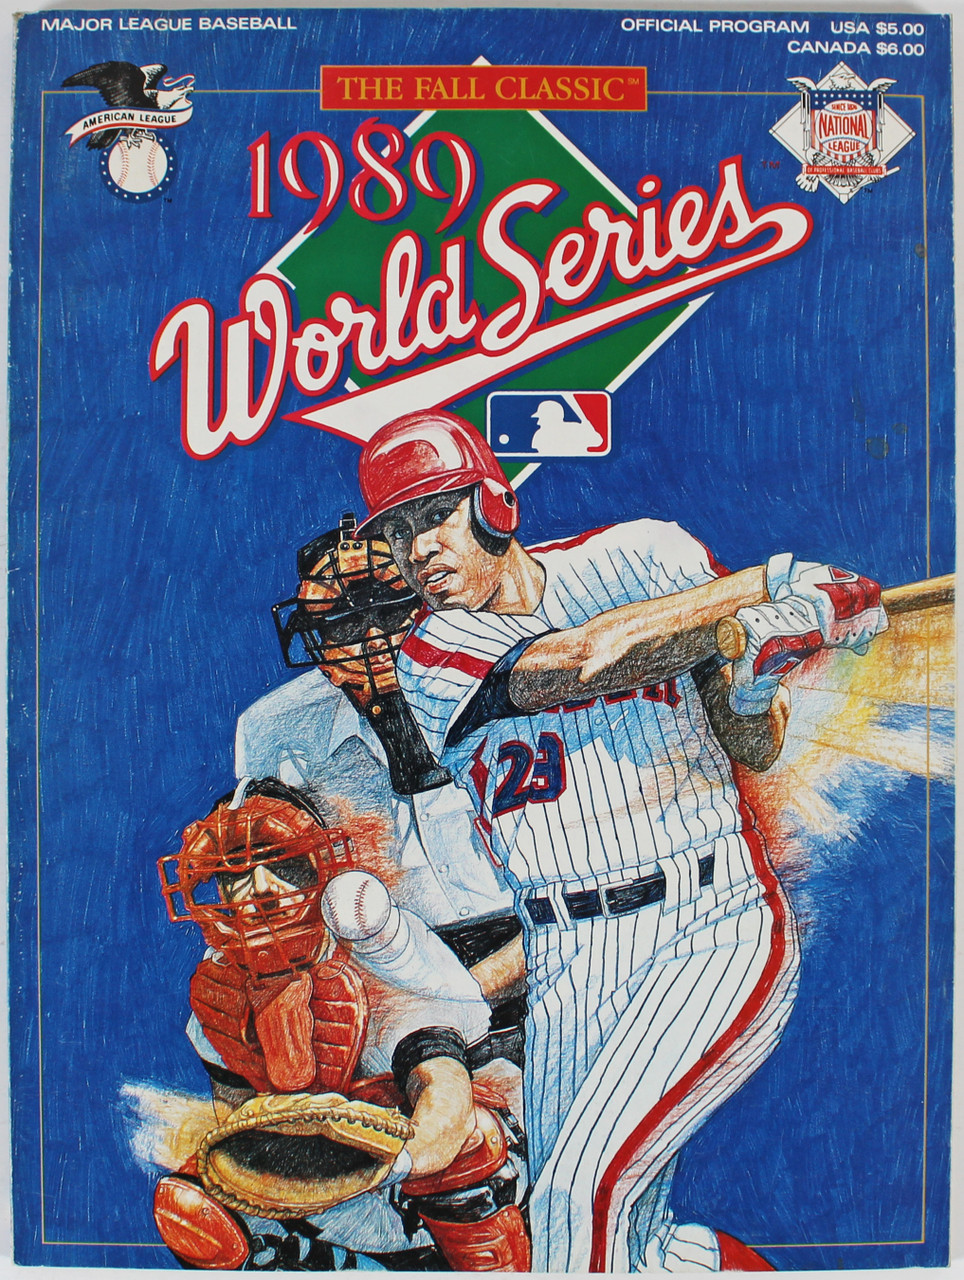 1989 World Series (1989)